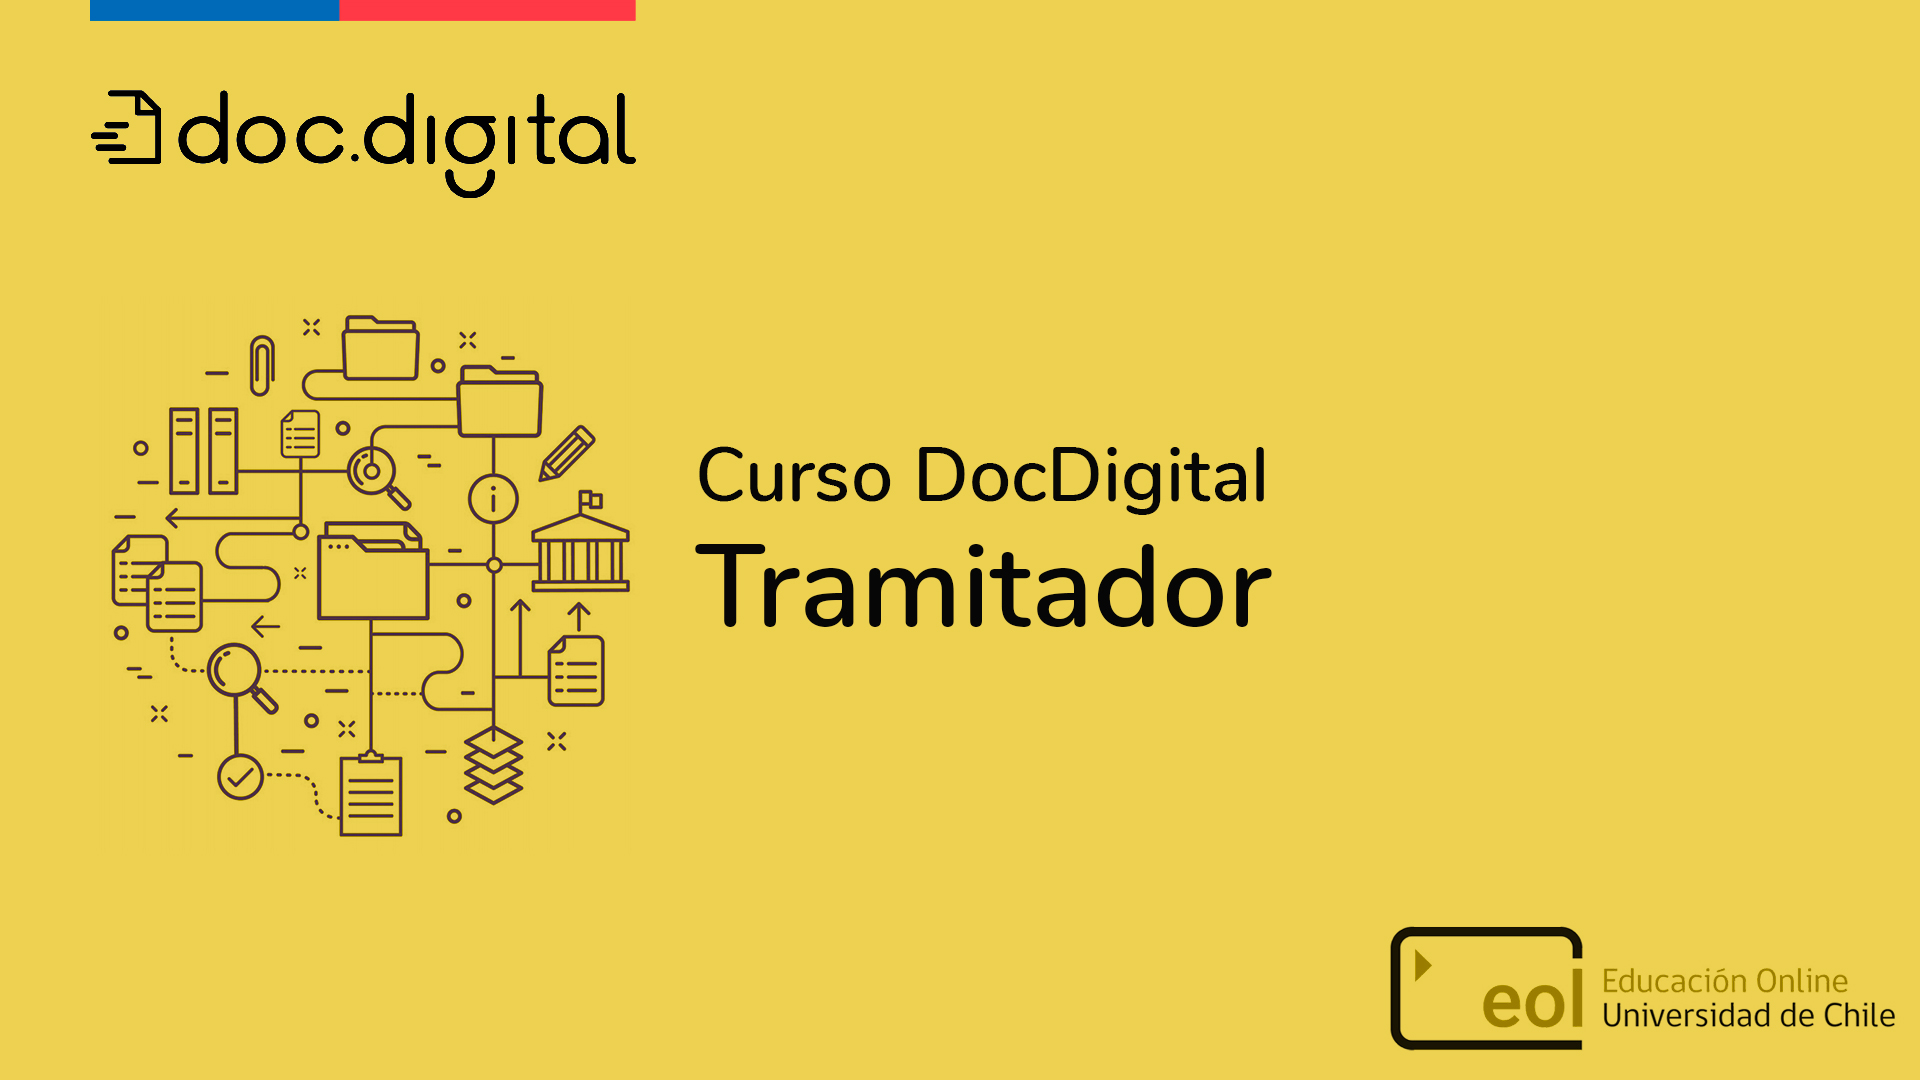 DocDigital Tramitador ddtra001